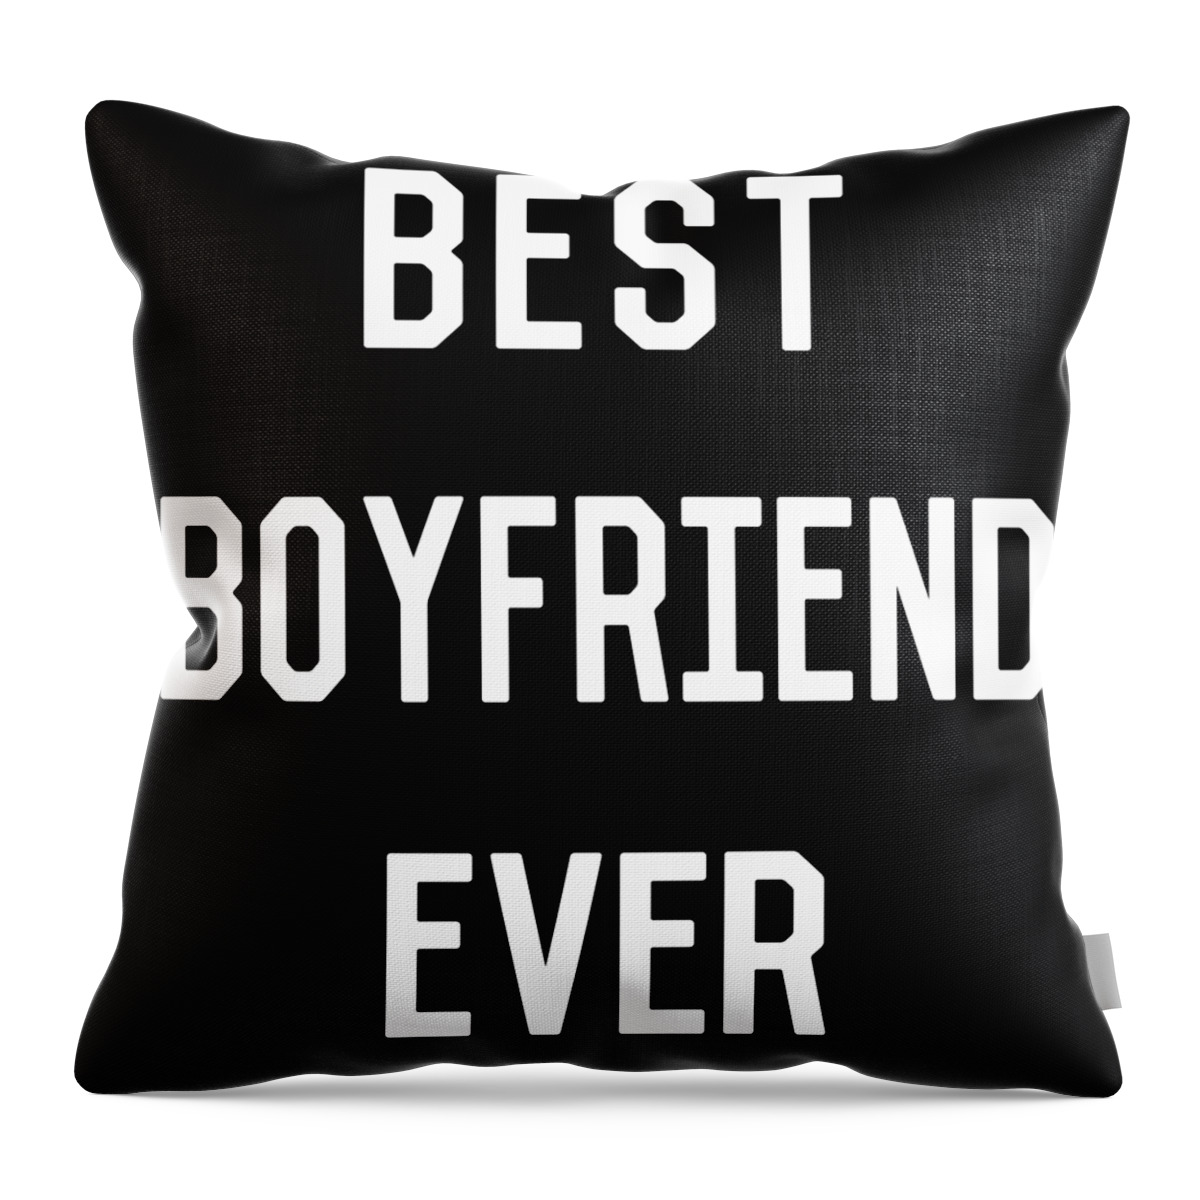 Gifts For Girlfriend Throw Pillow featuring the digital art Best Boyfriend Ever by Flippin Sweet Gear